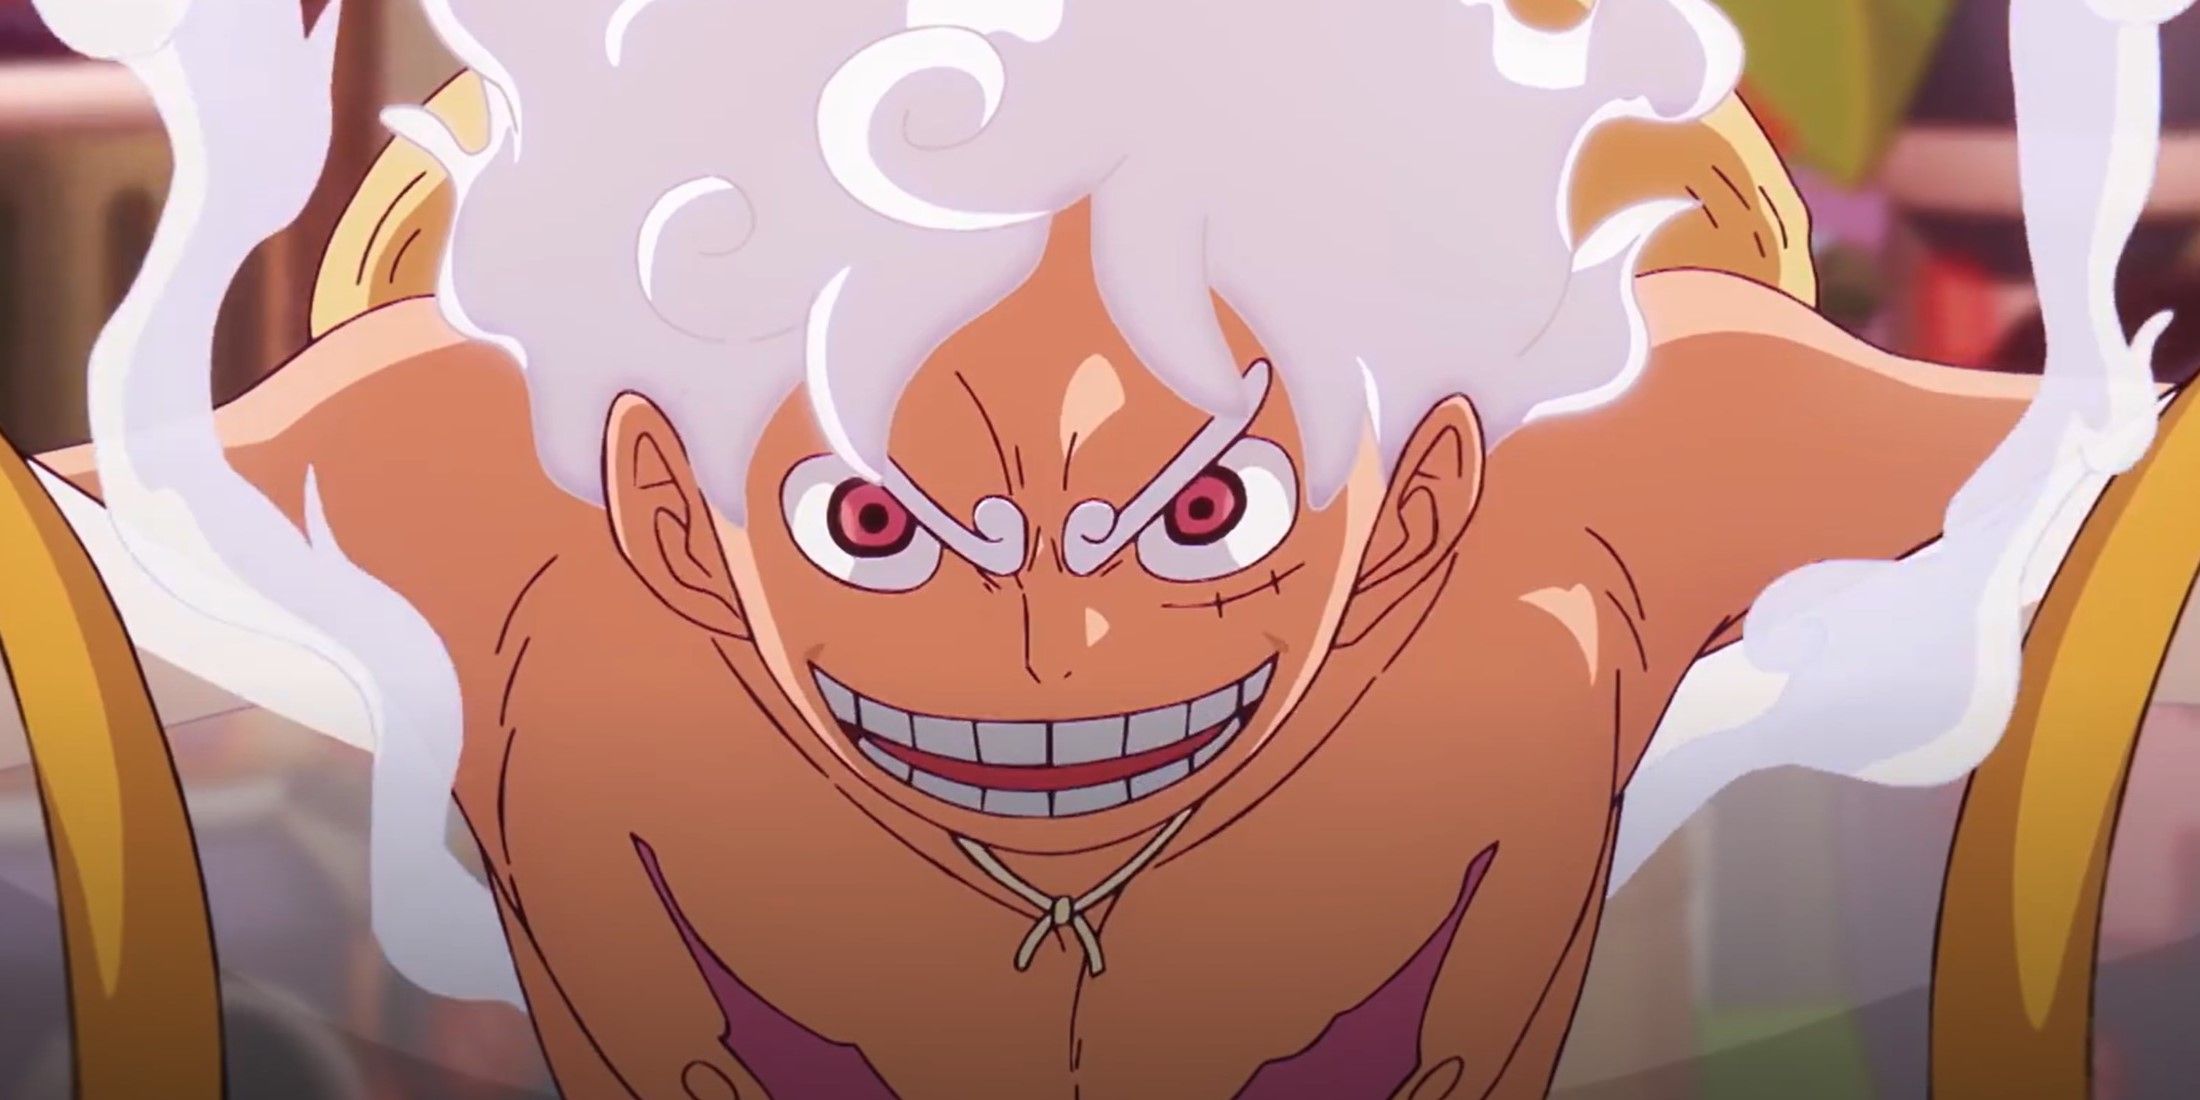 How One Piece's Final Saga Could Surpass Its Shonen Peers Gear 5 Luffy - Featured